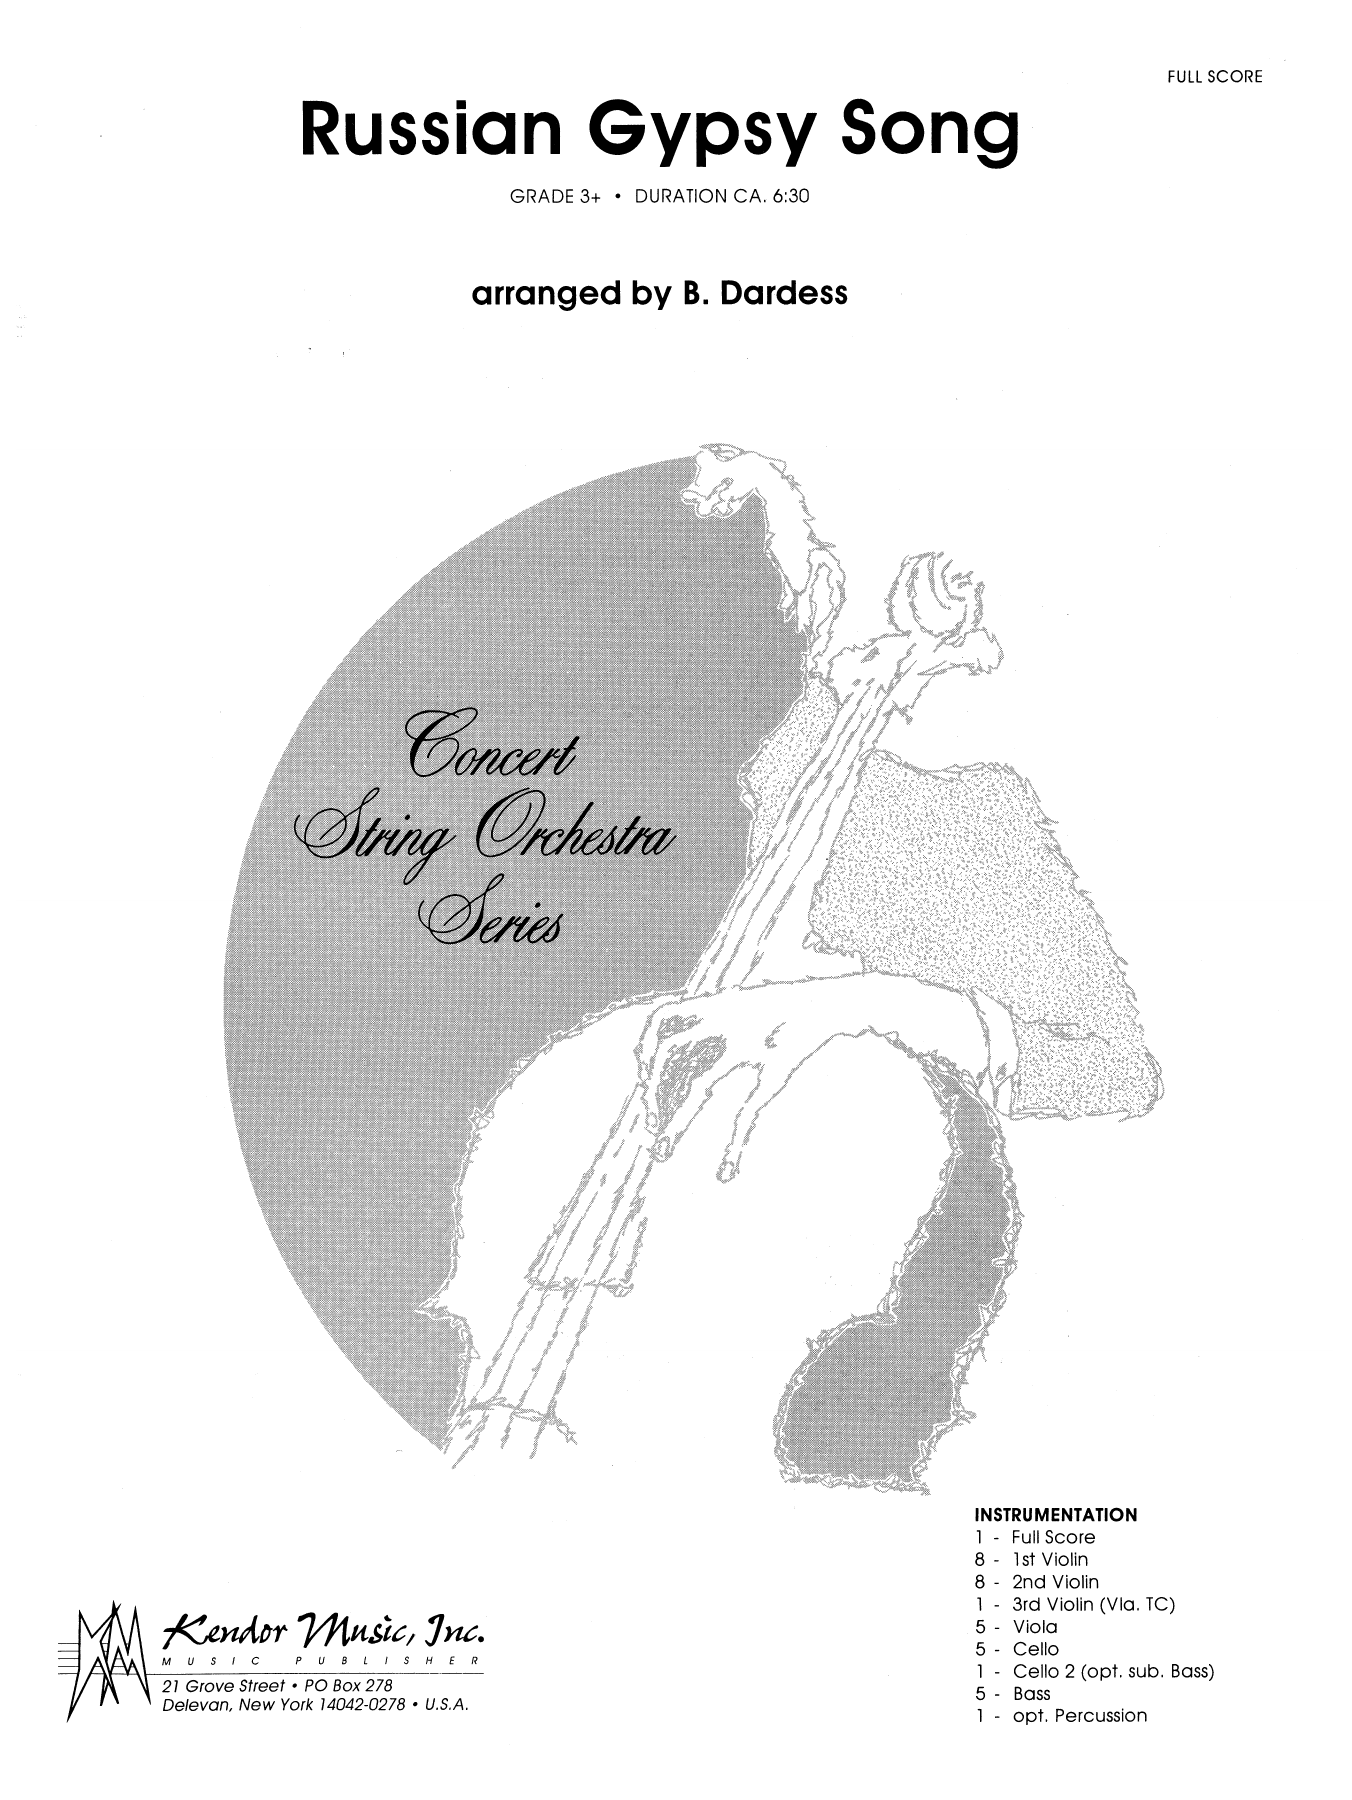 Download Betty Dardess Russian Gypsy Song - Full Score Sheet Music